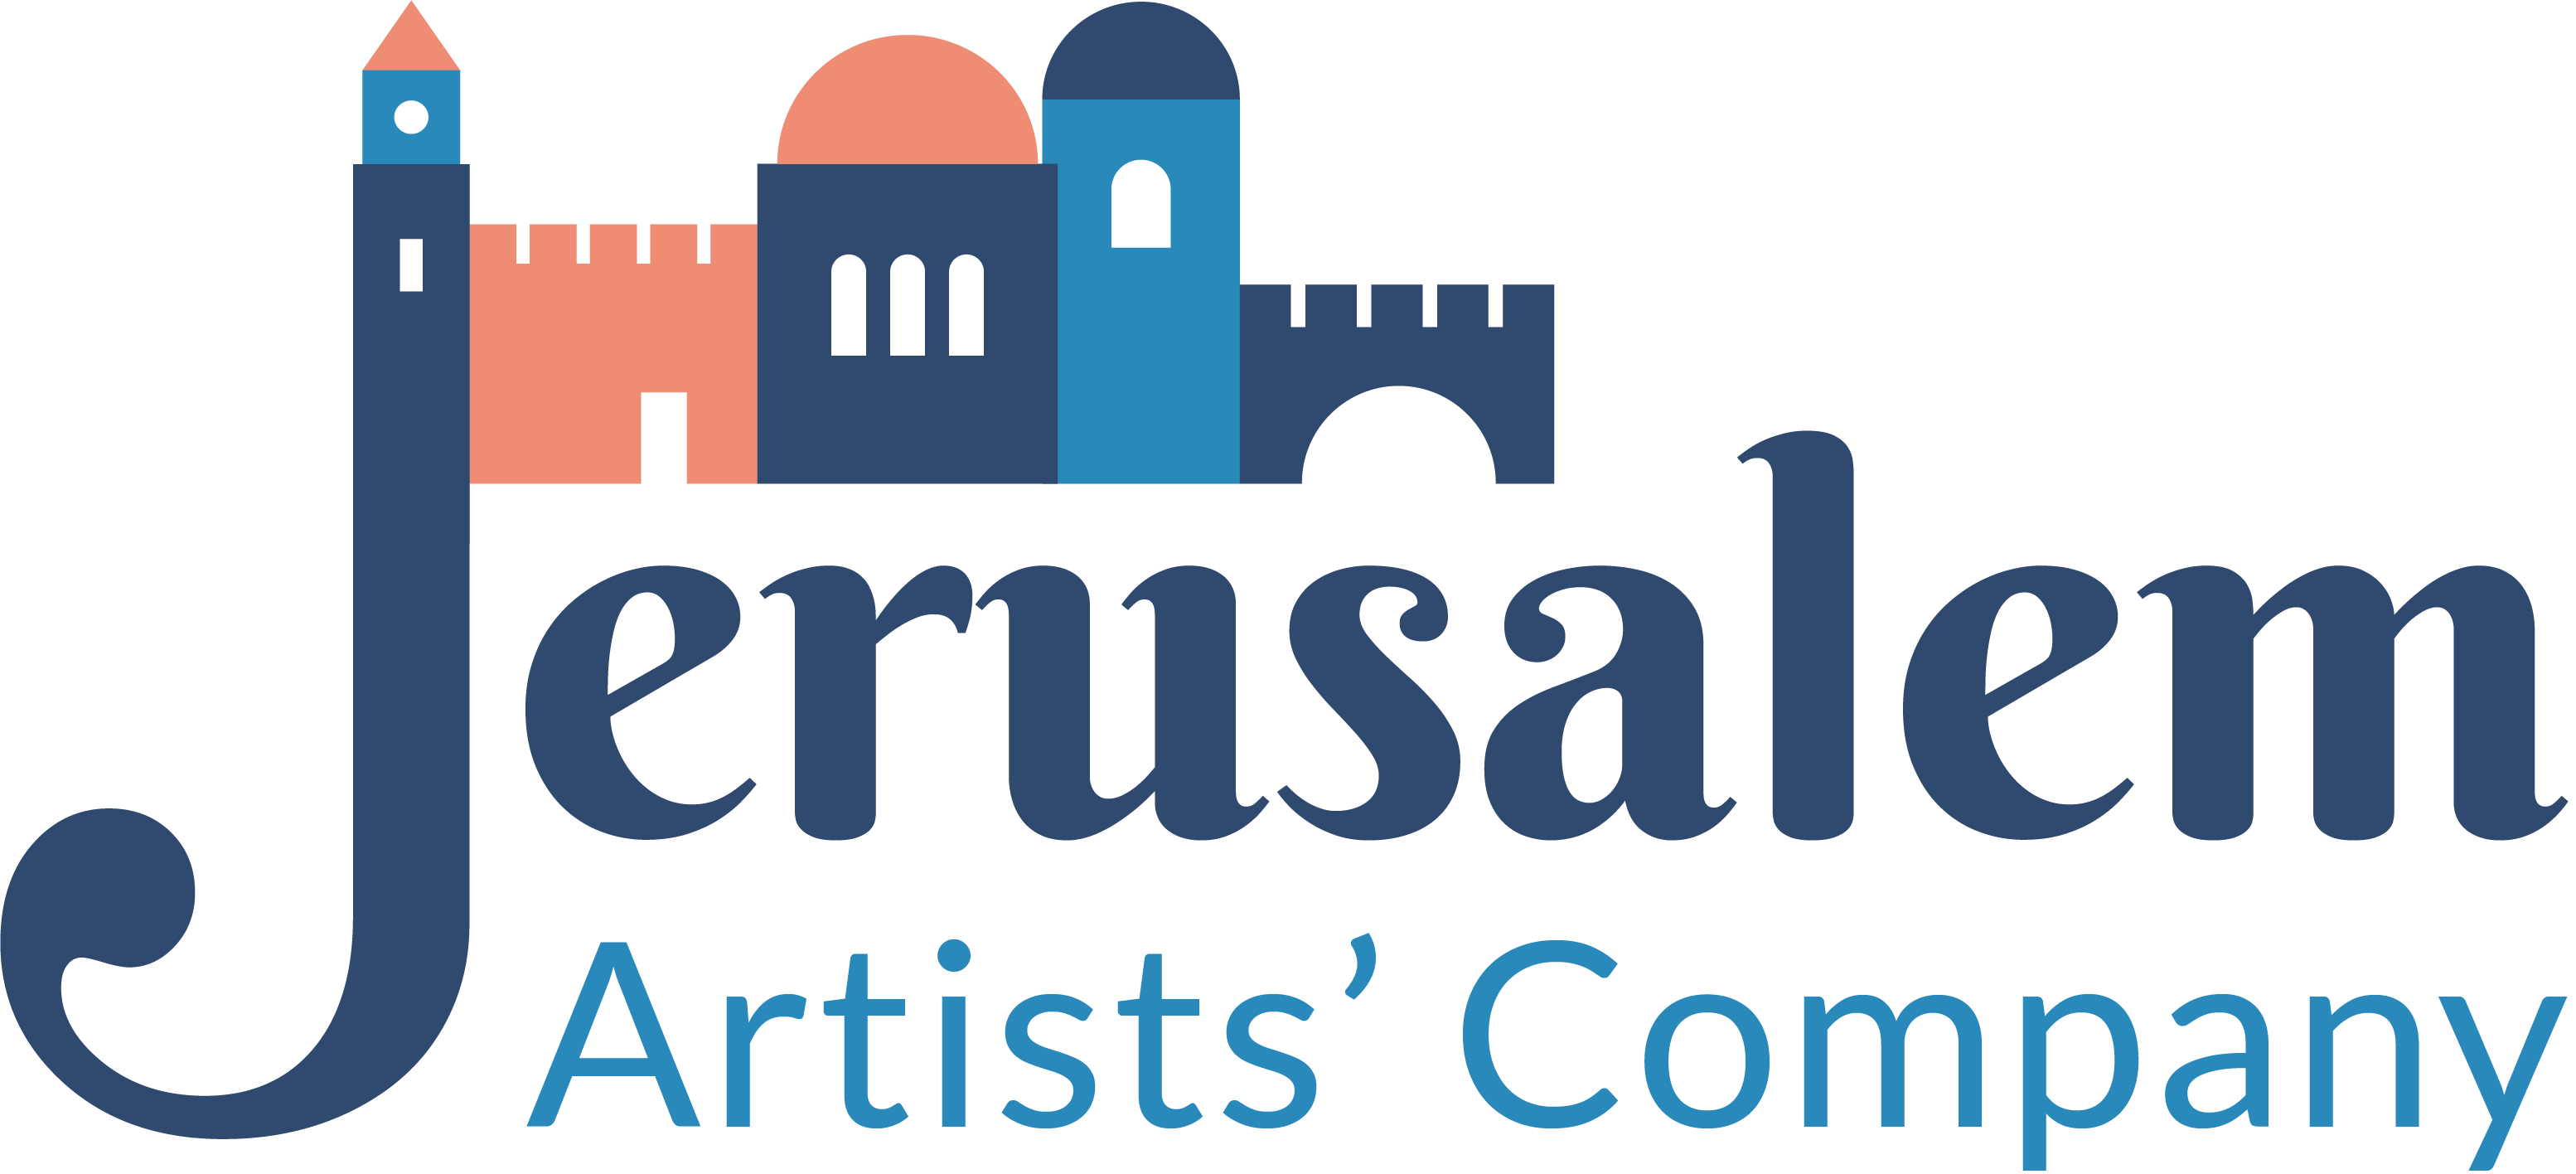 Jerusalem Artists